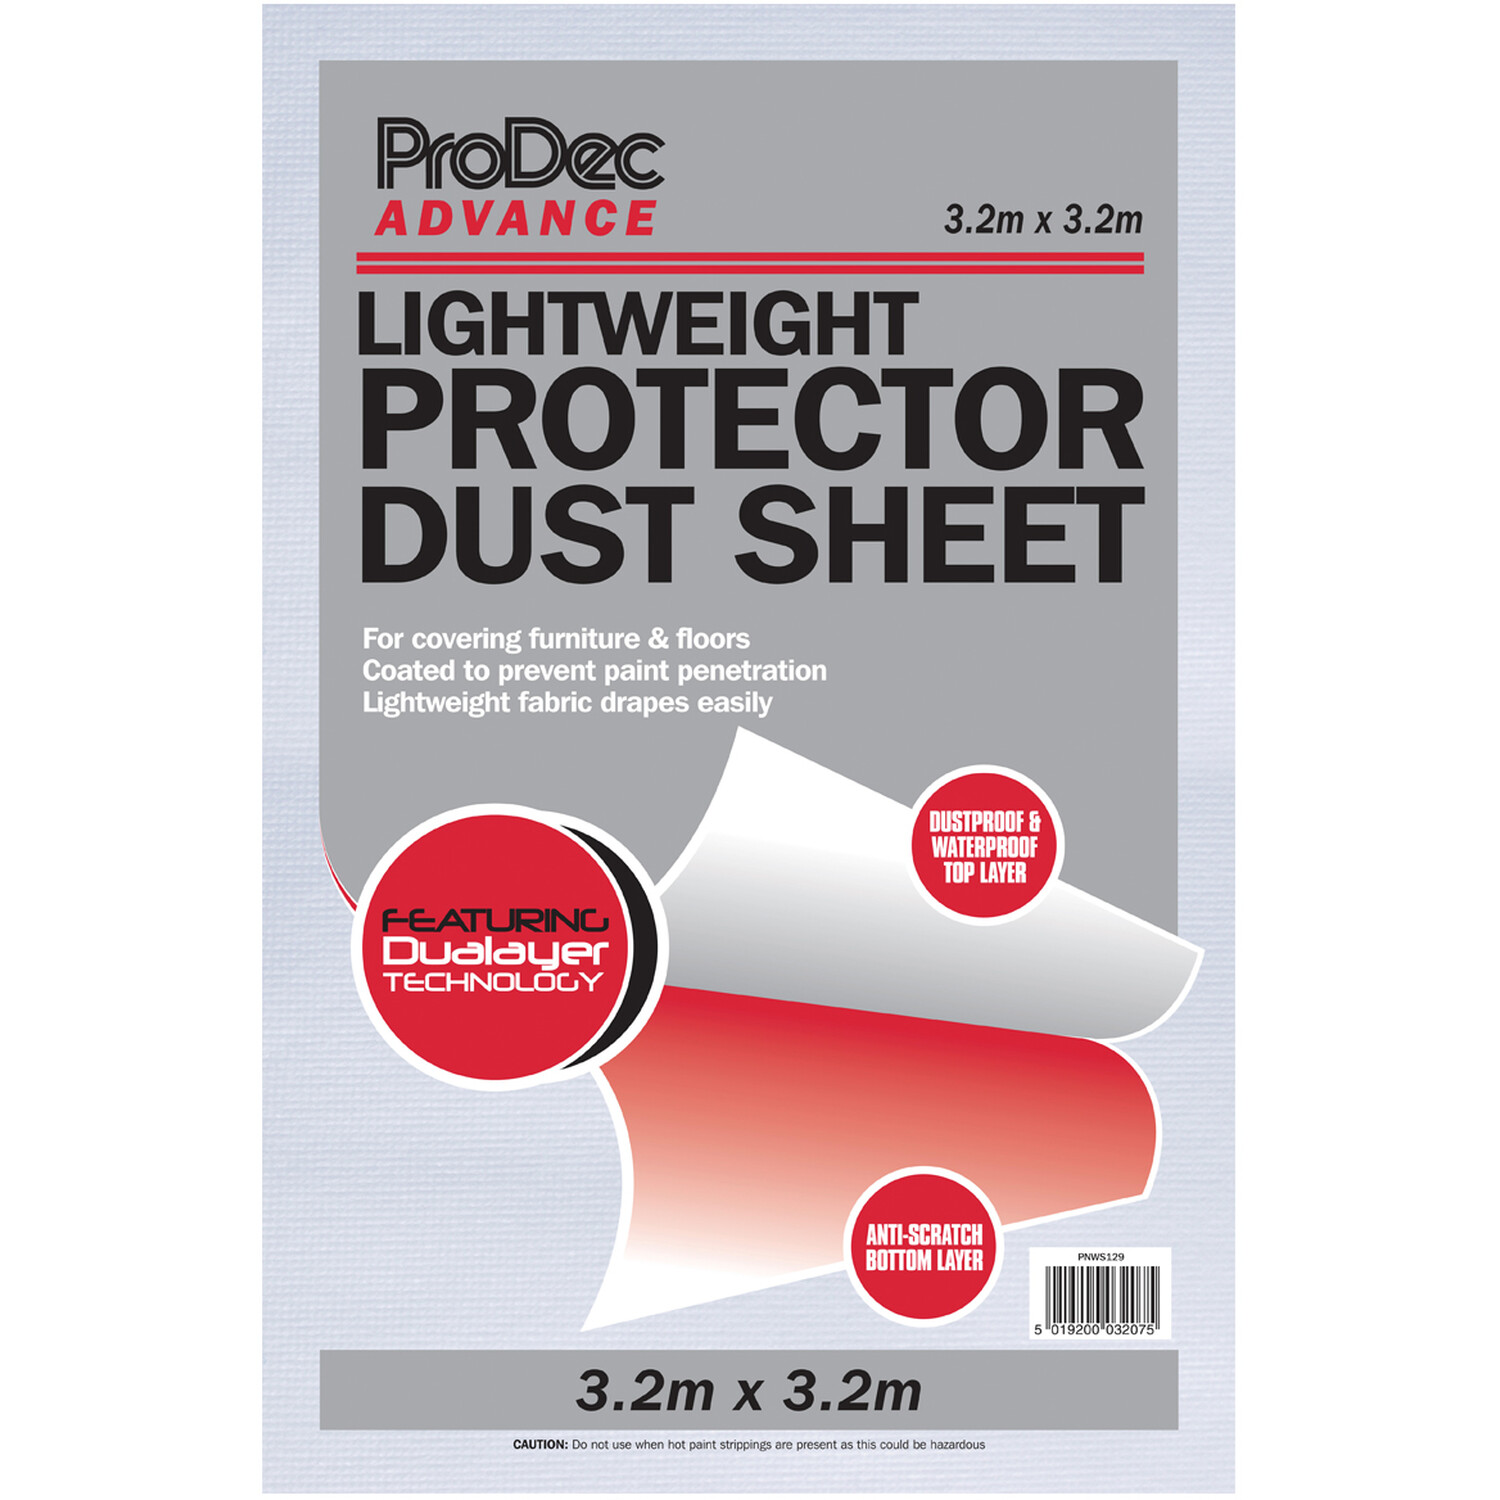 ProDec Lightweight Protector Dust Sheet Image 1